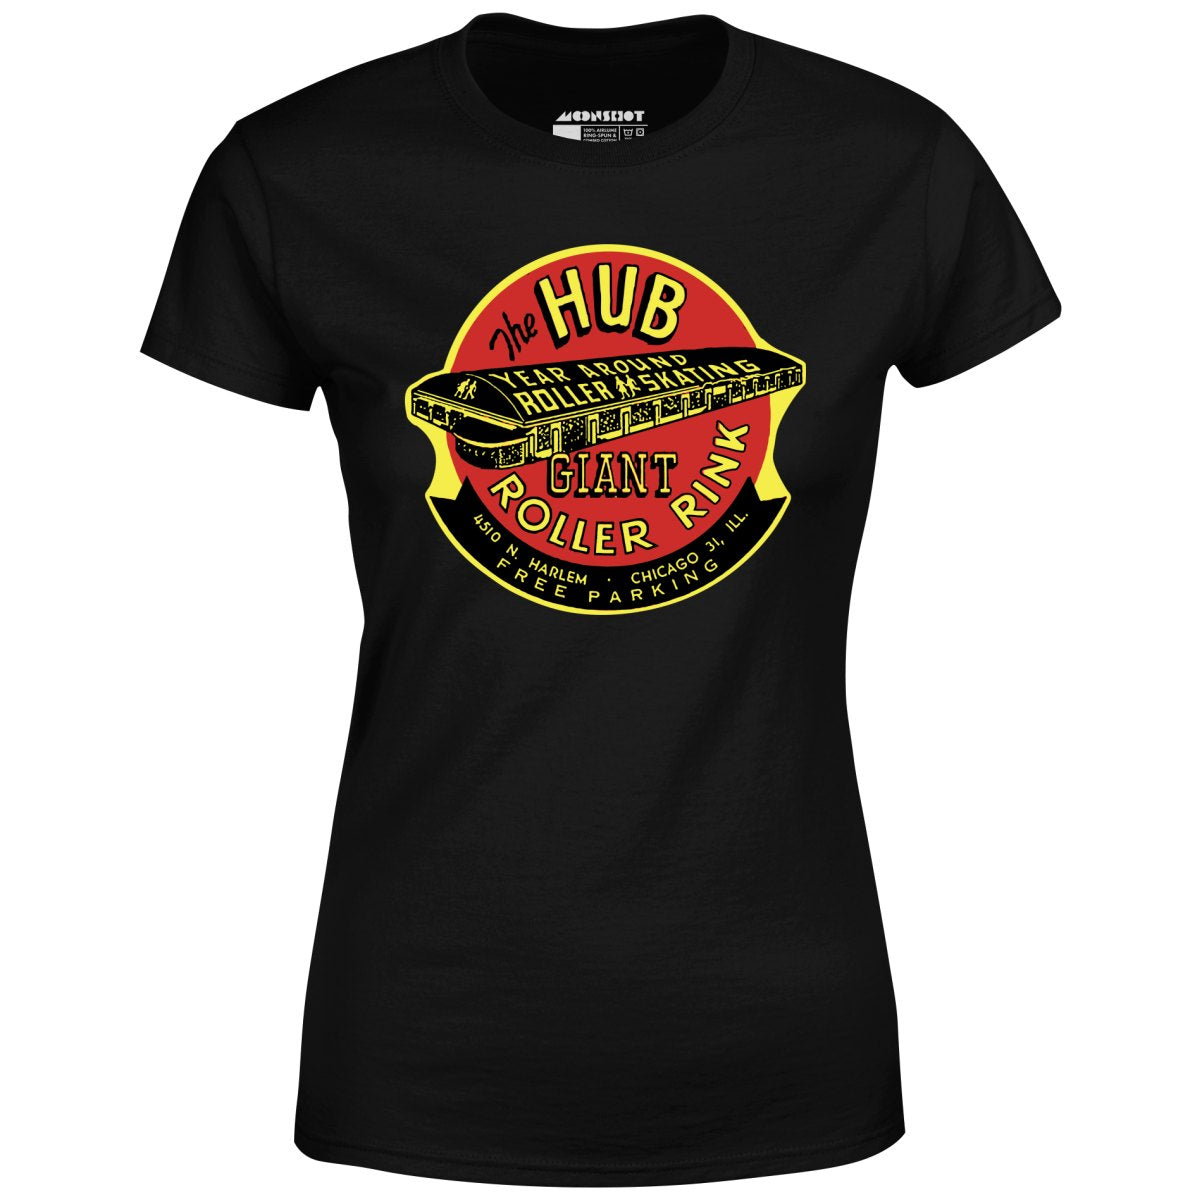 The Hub Roller Rink - Chicago, Illinois - Vintage Roller Rink - Women's T-Shirt